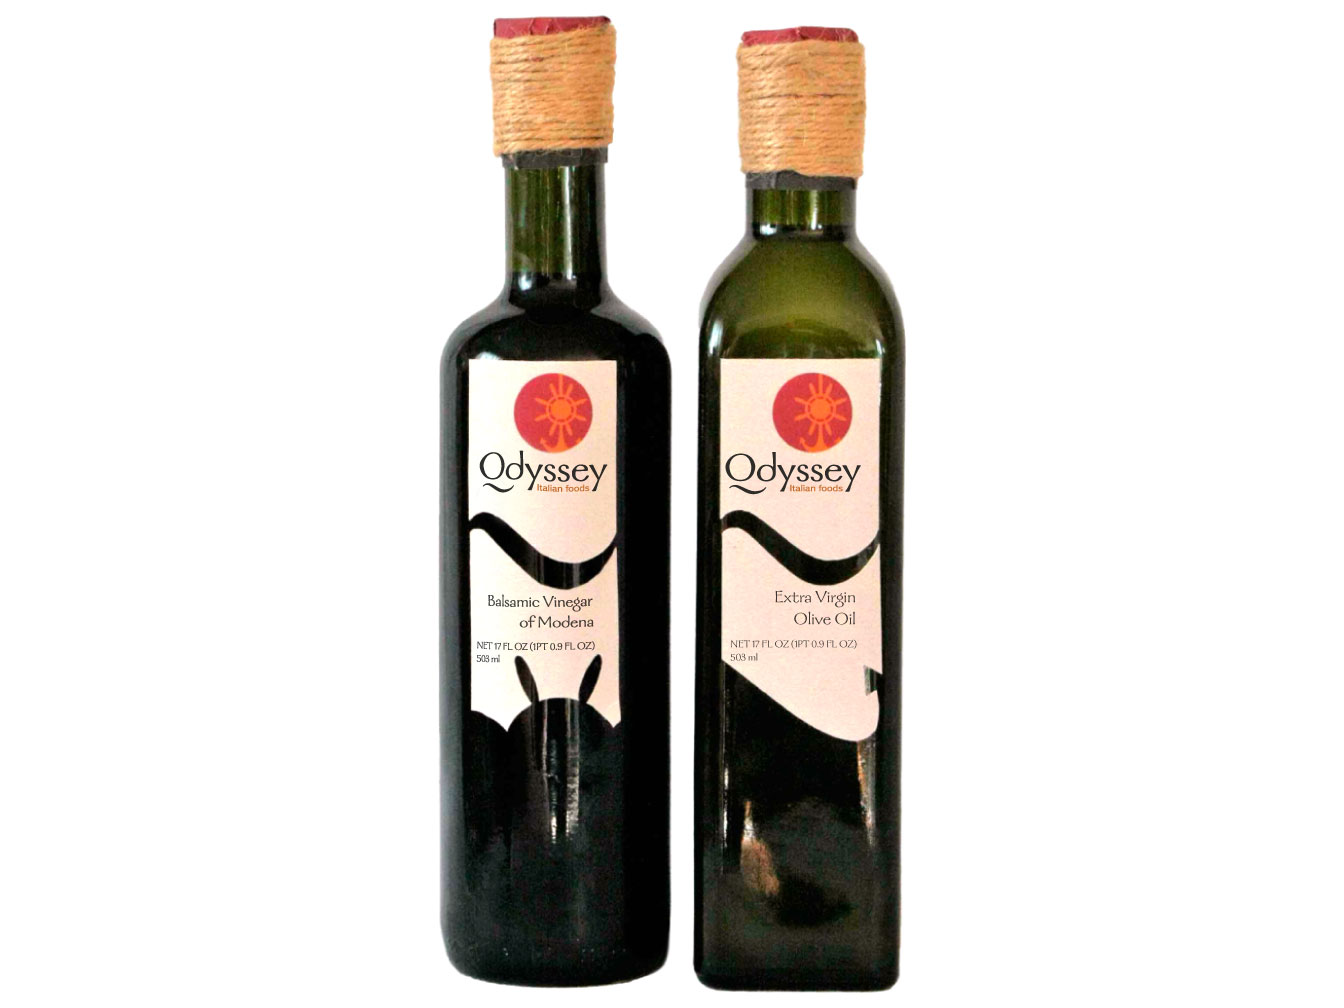 Odyssey Oil and Vinegar Packaging Design